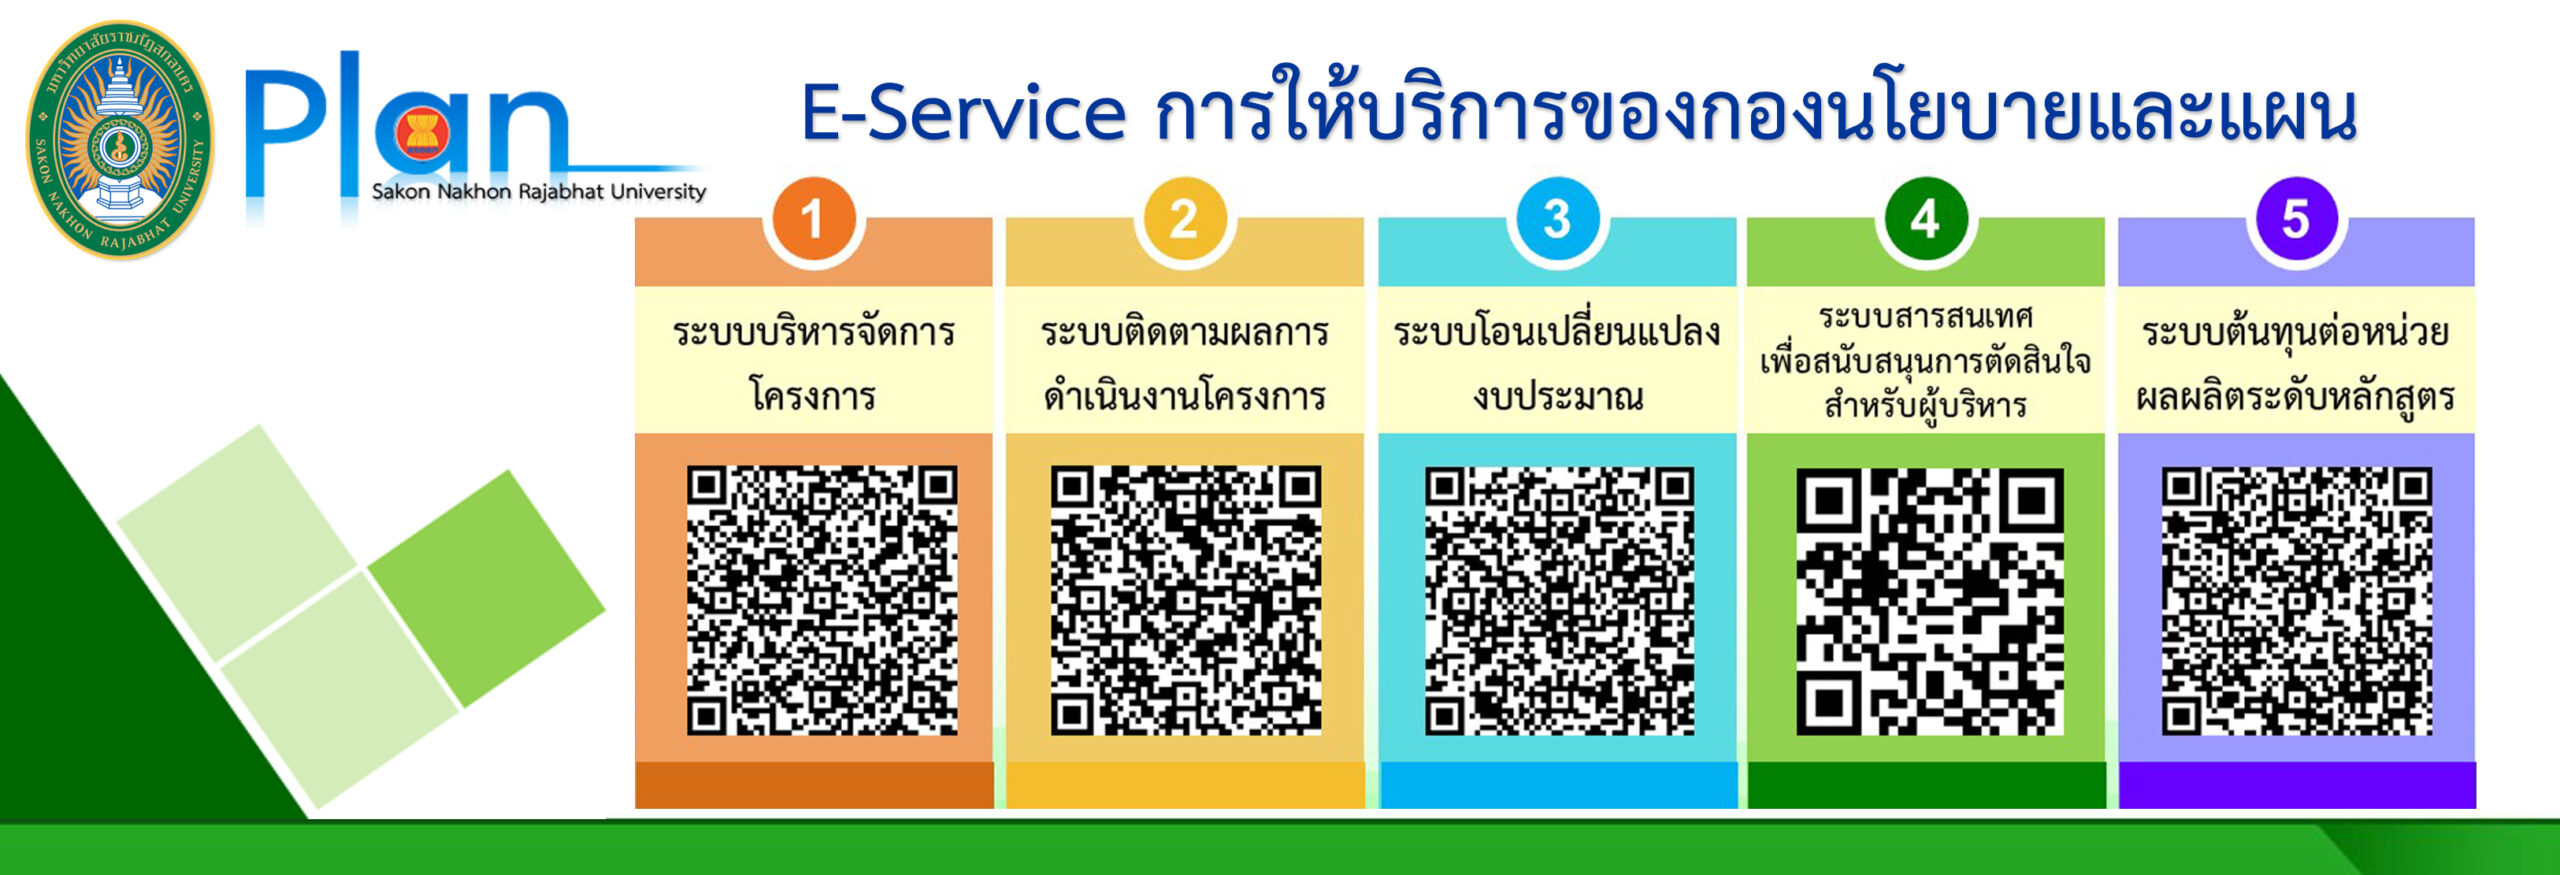 E-Service การให้บริการของกองนโยบายและแผน